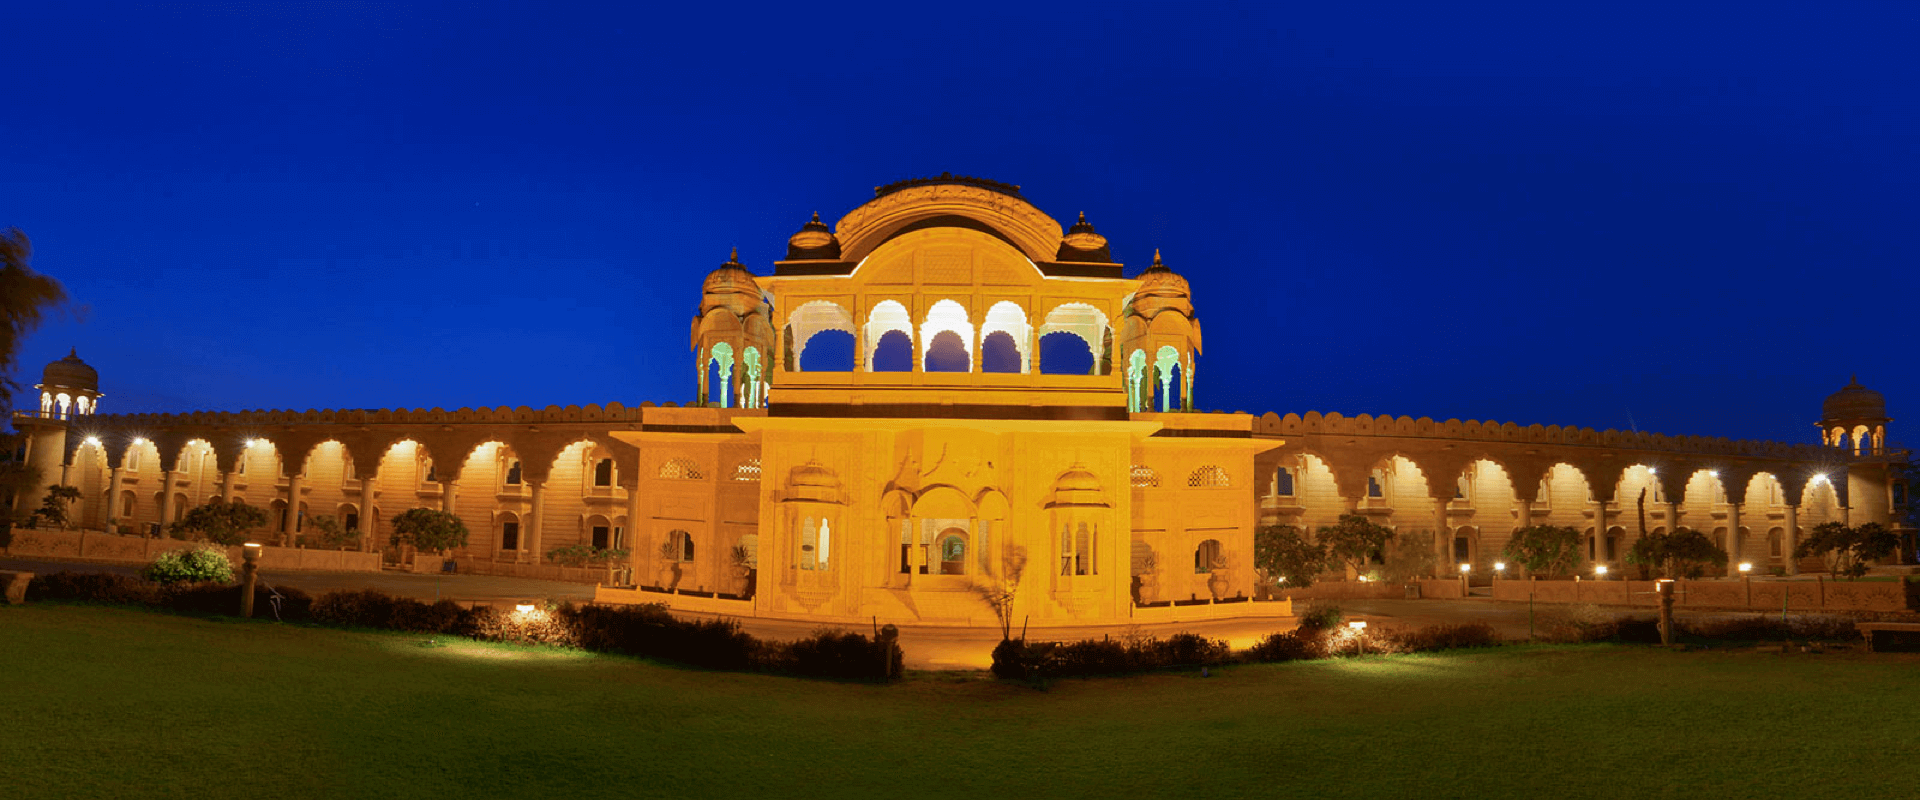 fort rajwada, jaisalmer (1)1624078575.png